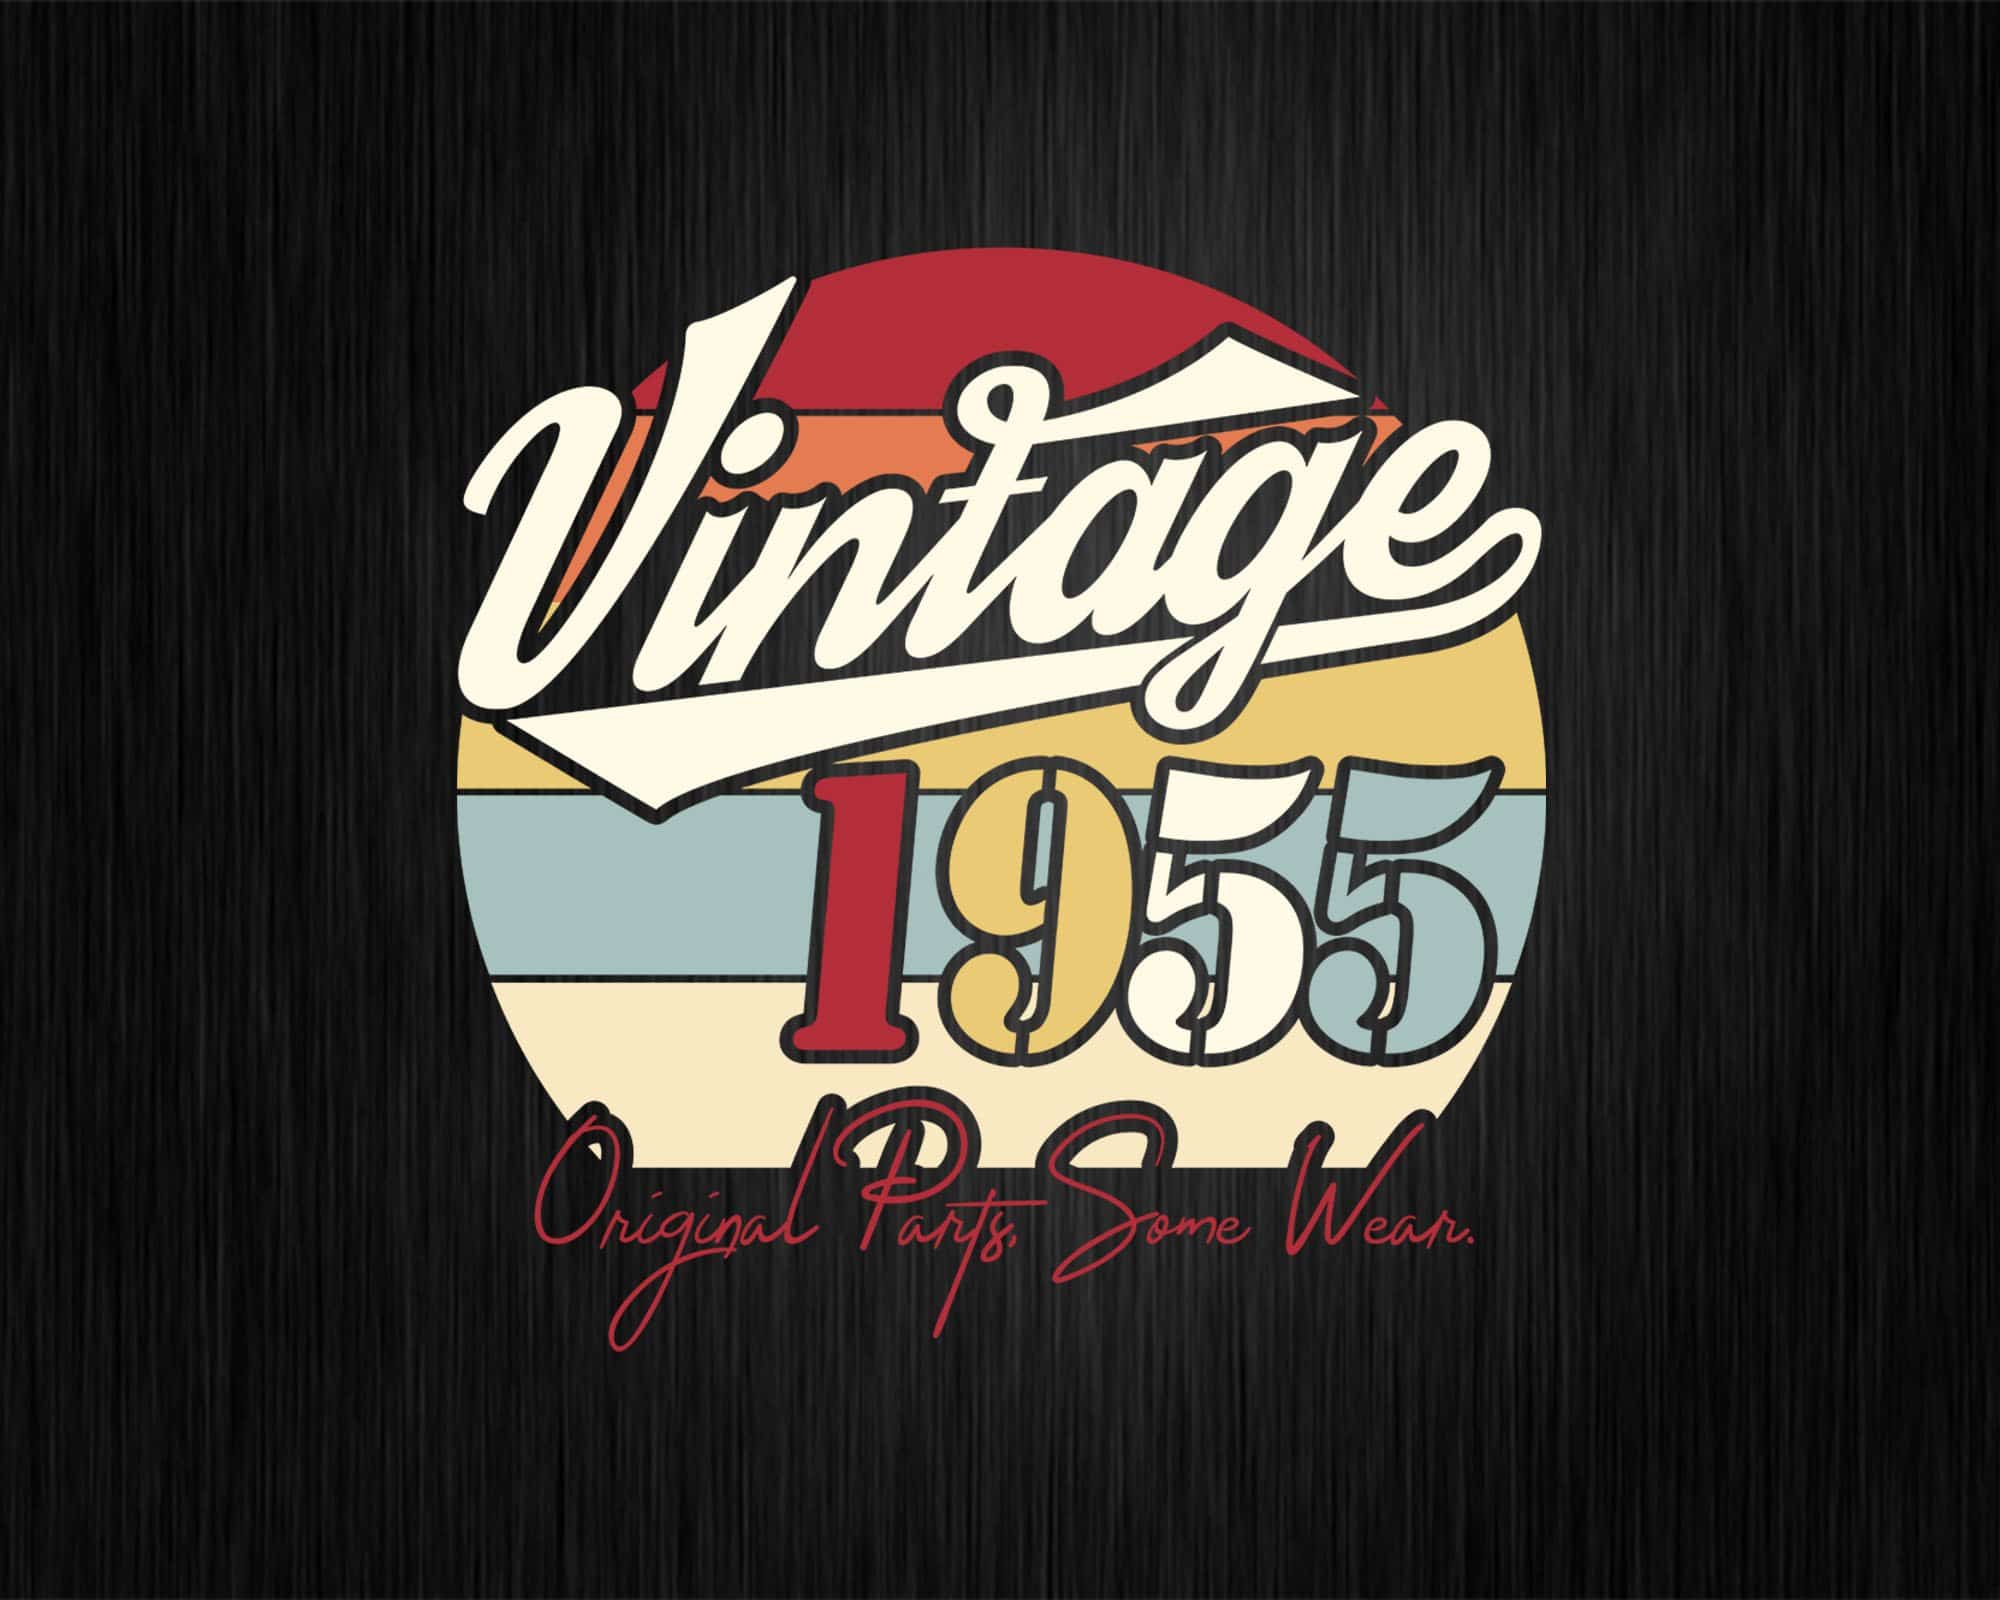 Vintage 67th Birthday 1955 Original Parts Some Wear Svg Png T-shirt ...